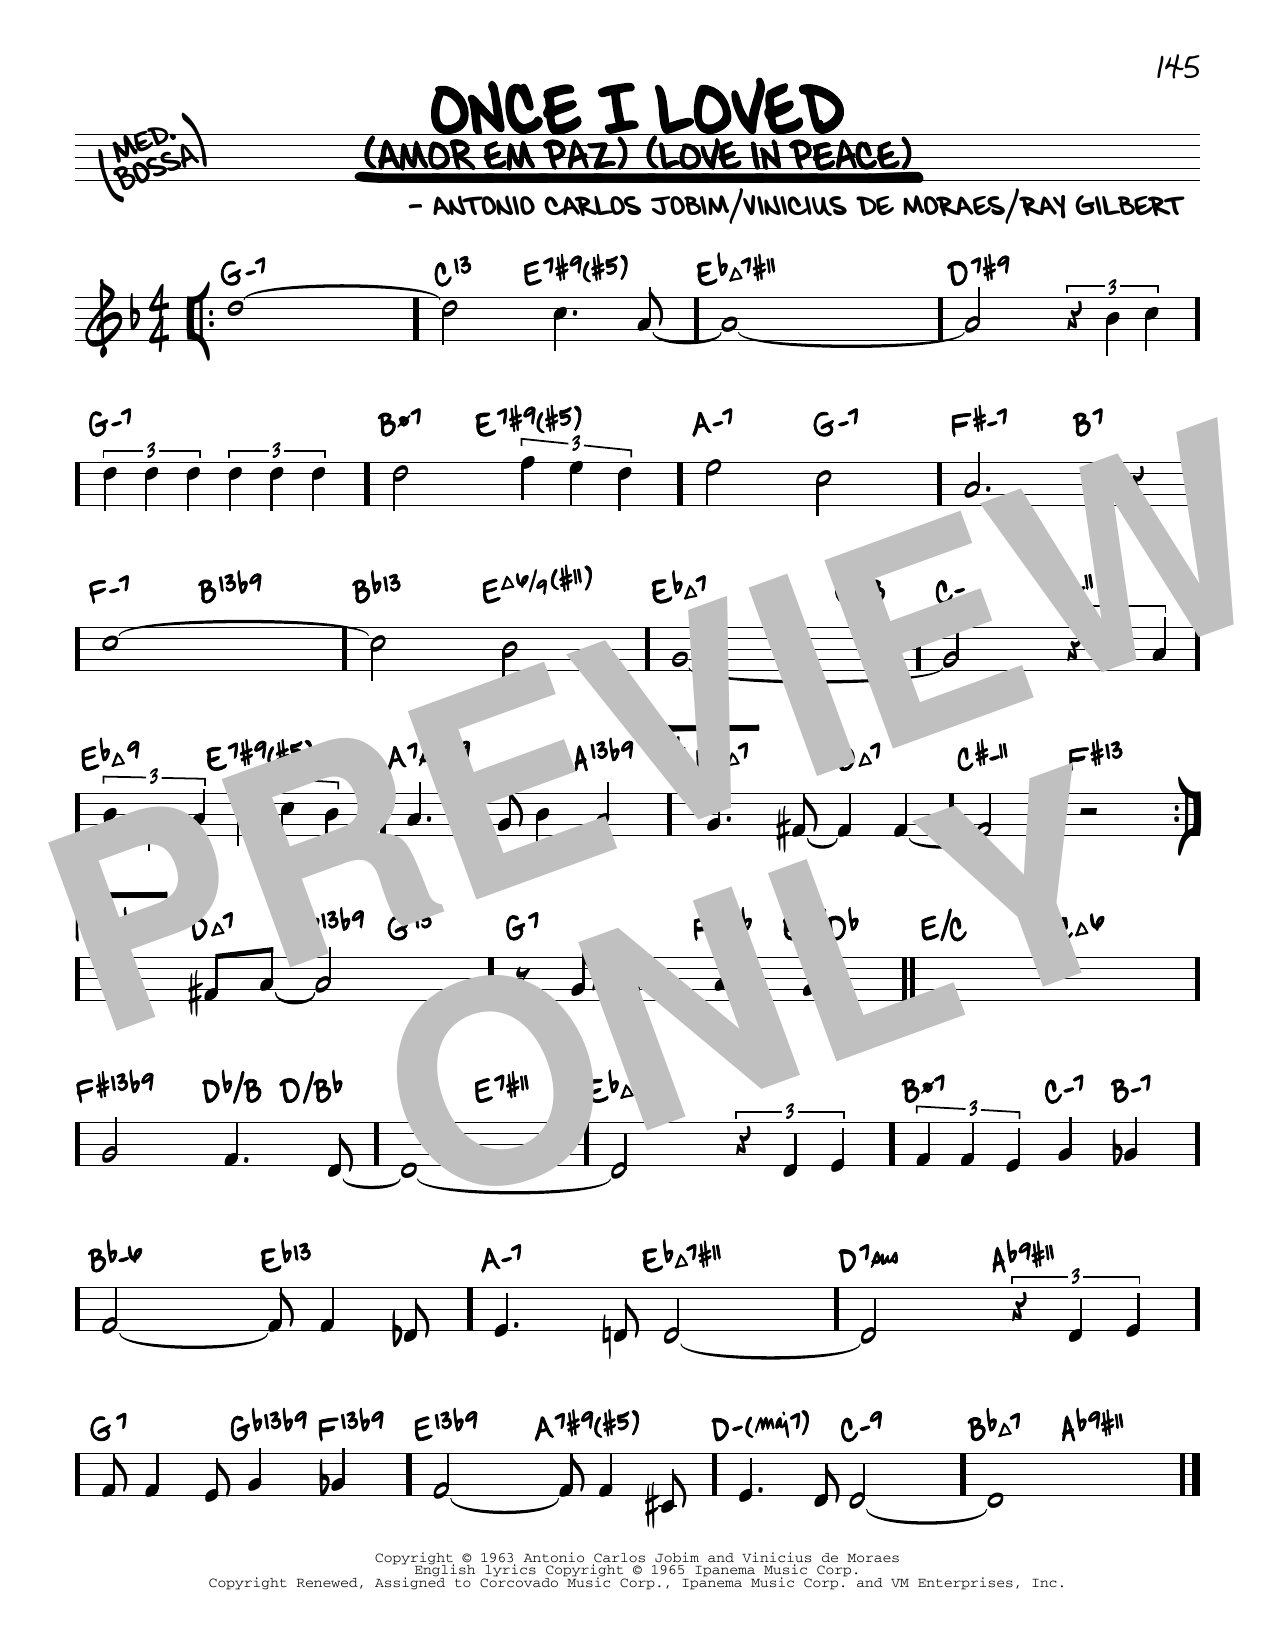 Antonio Carlos Jobim Once I Loved (Amor Em Paz) (Love In Peace) (arr. David Hazeltine) Sheet Music Notes & Chords for Real Book – Enhanced Chords - Download or Print PDF